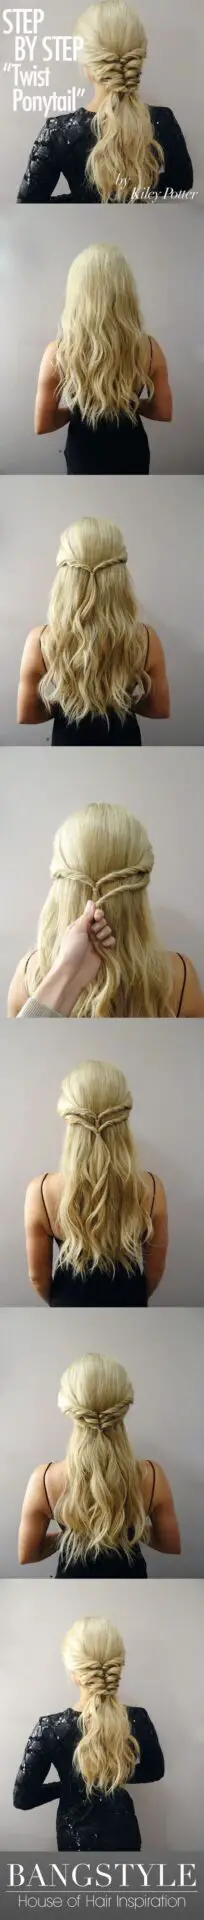 twist-ponytail